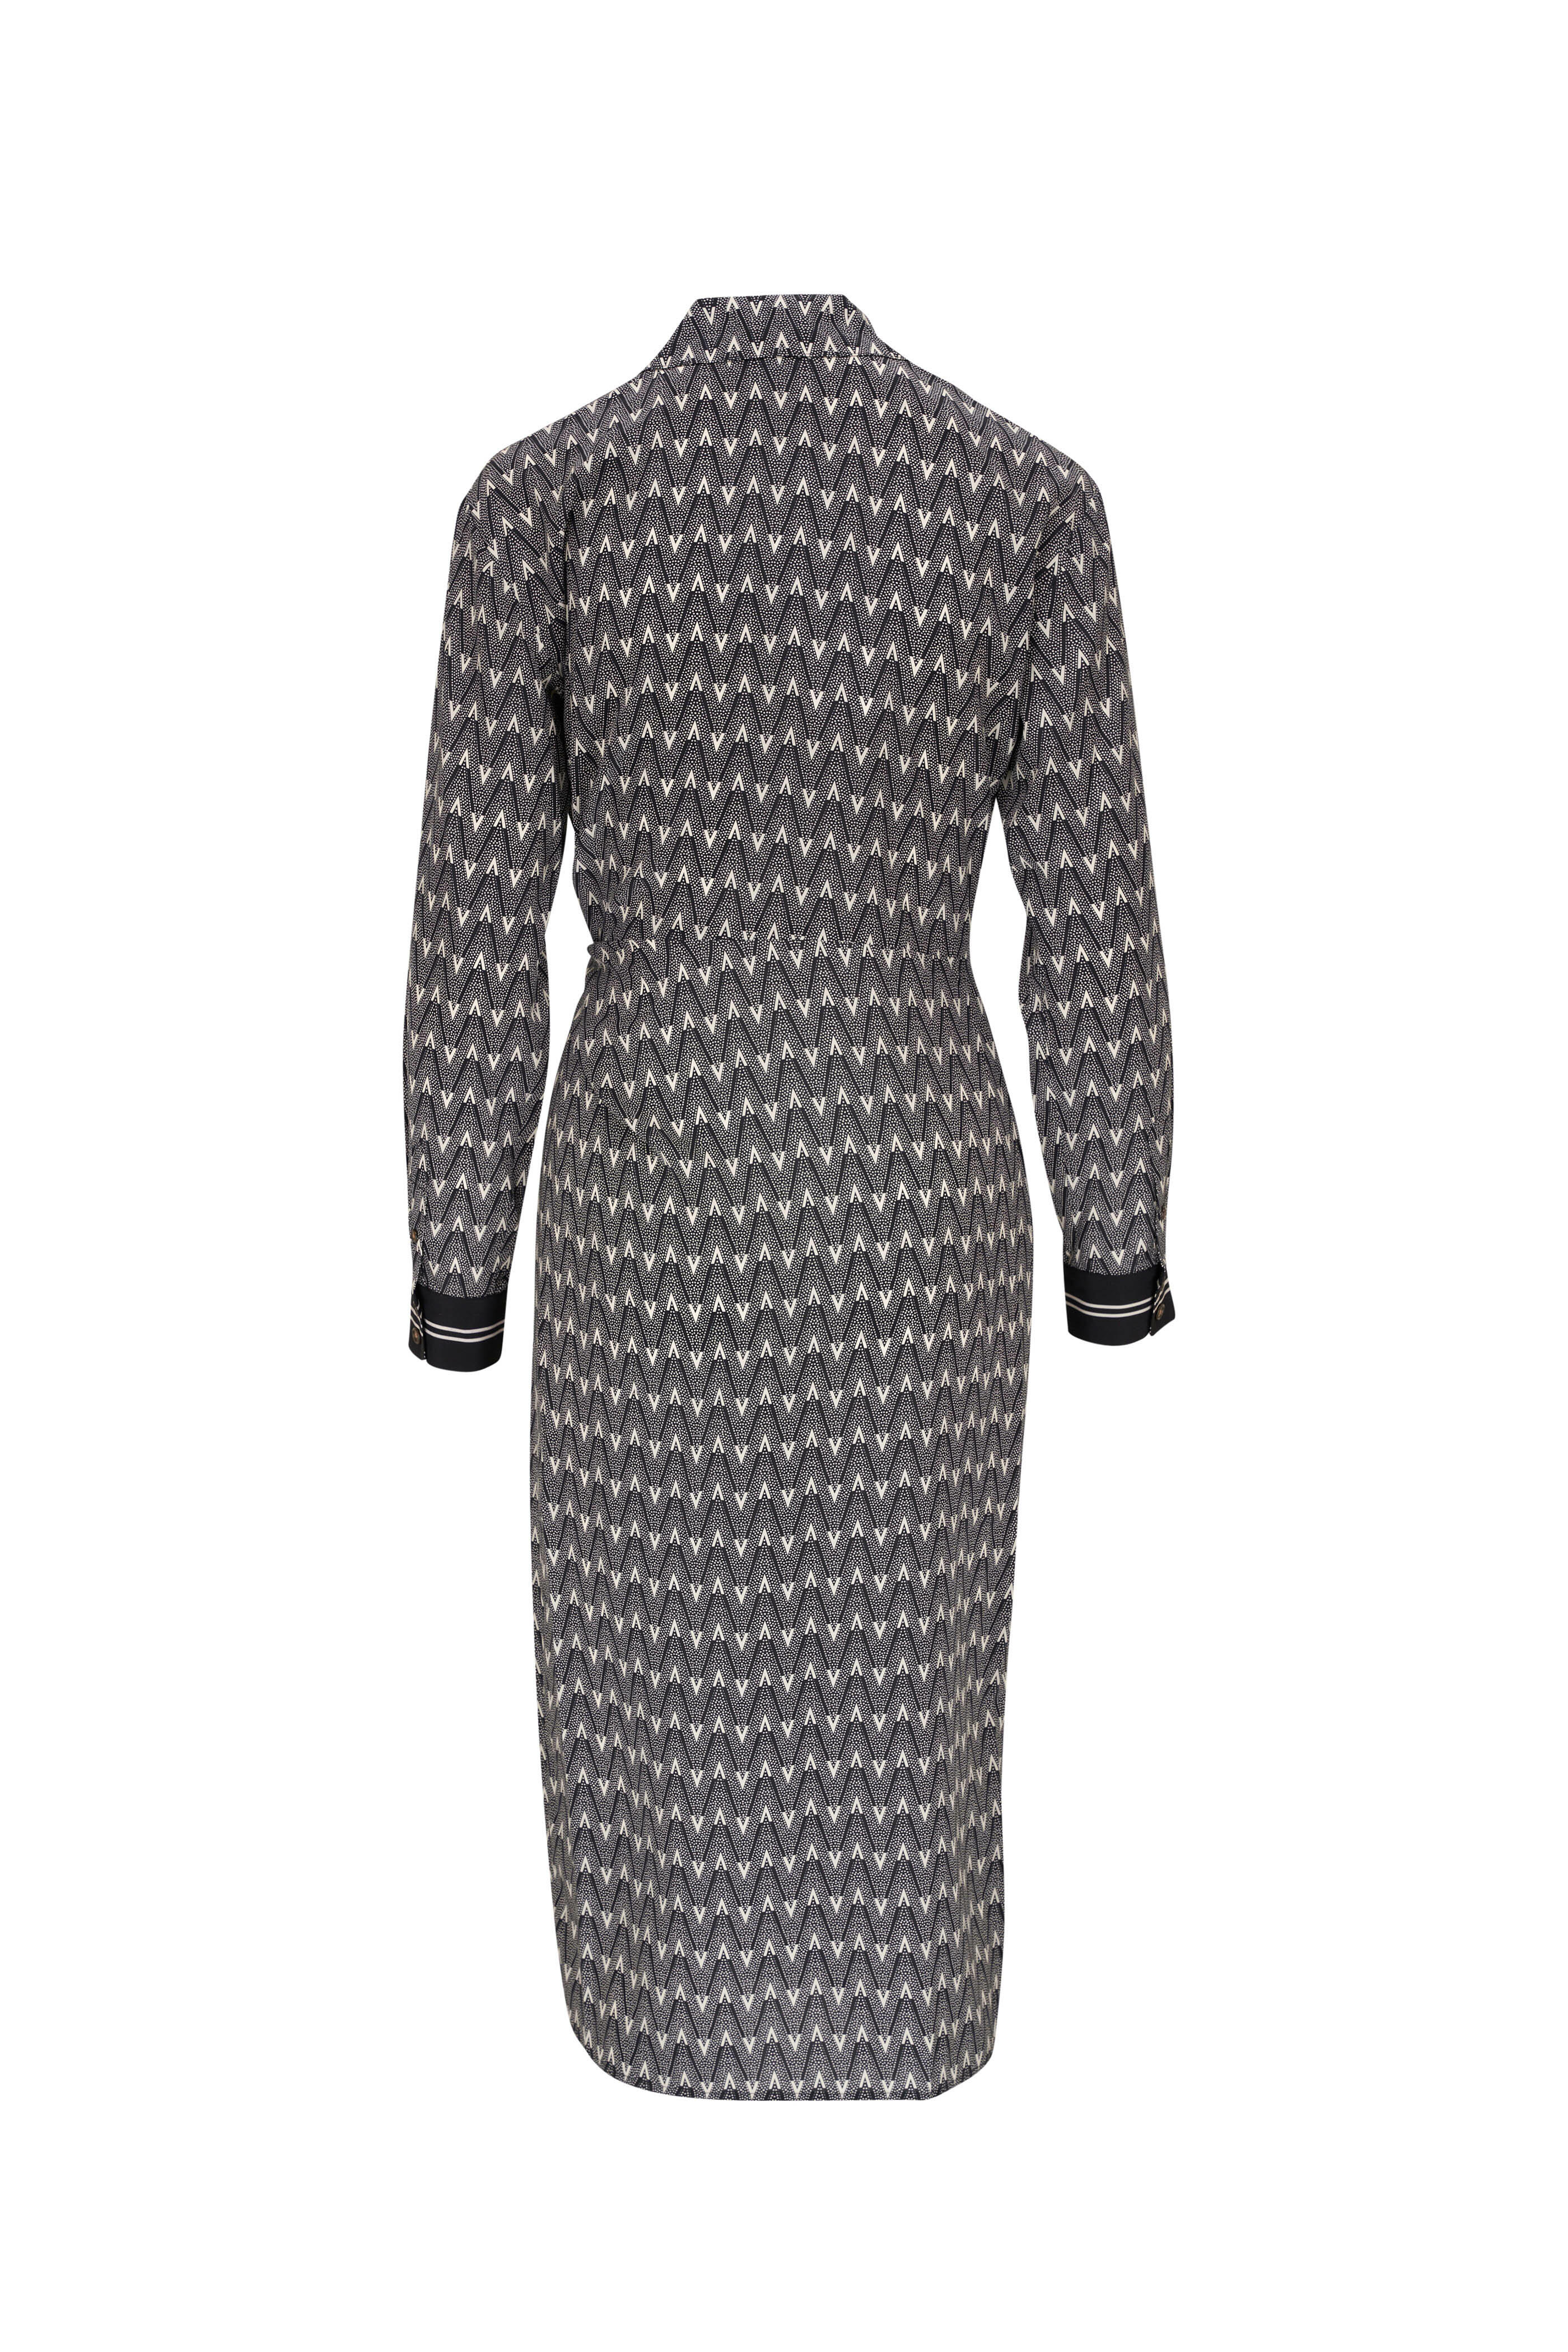 Veronica Beard - Wright Dot Print Midi Dress | Mitchell Stores